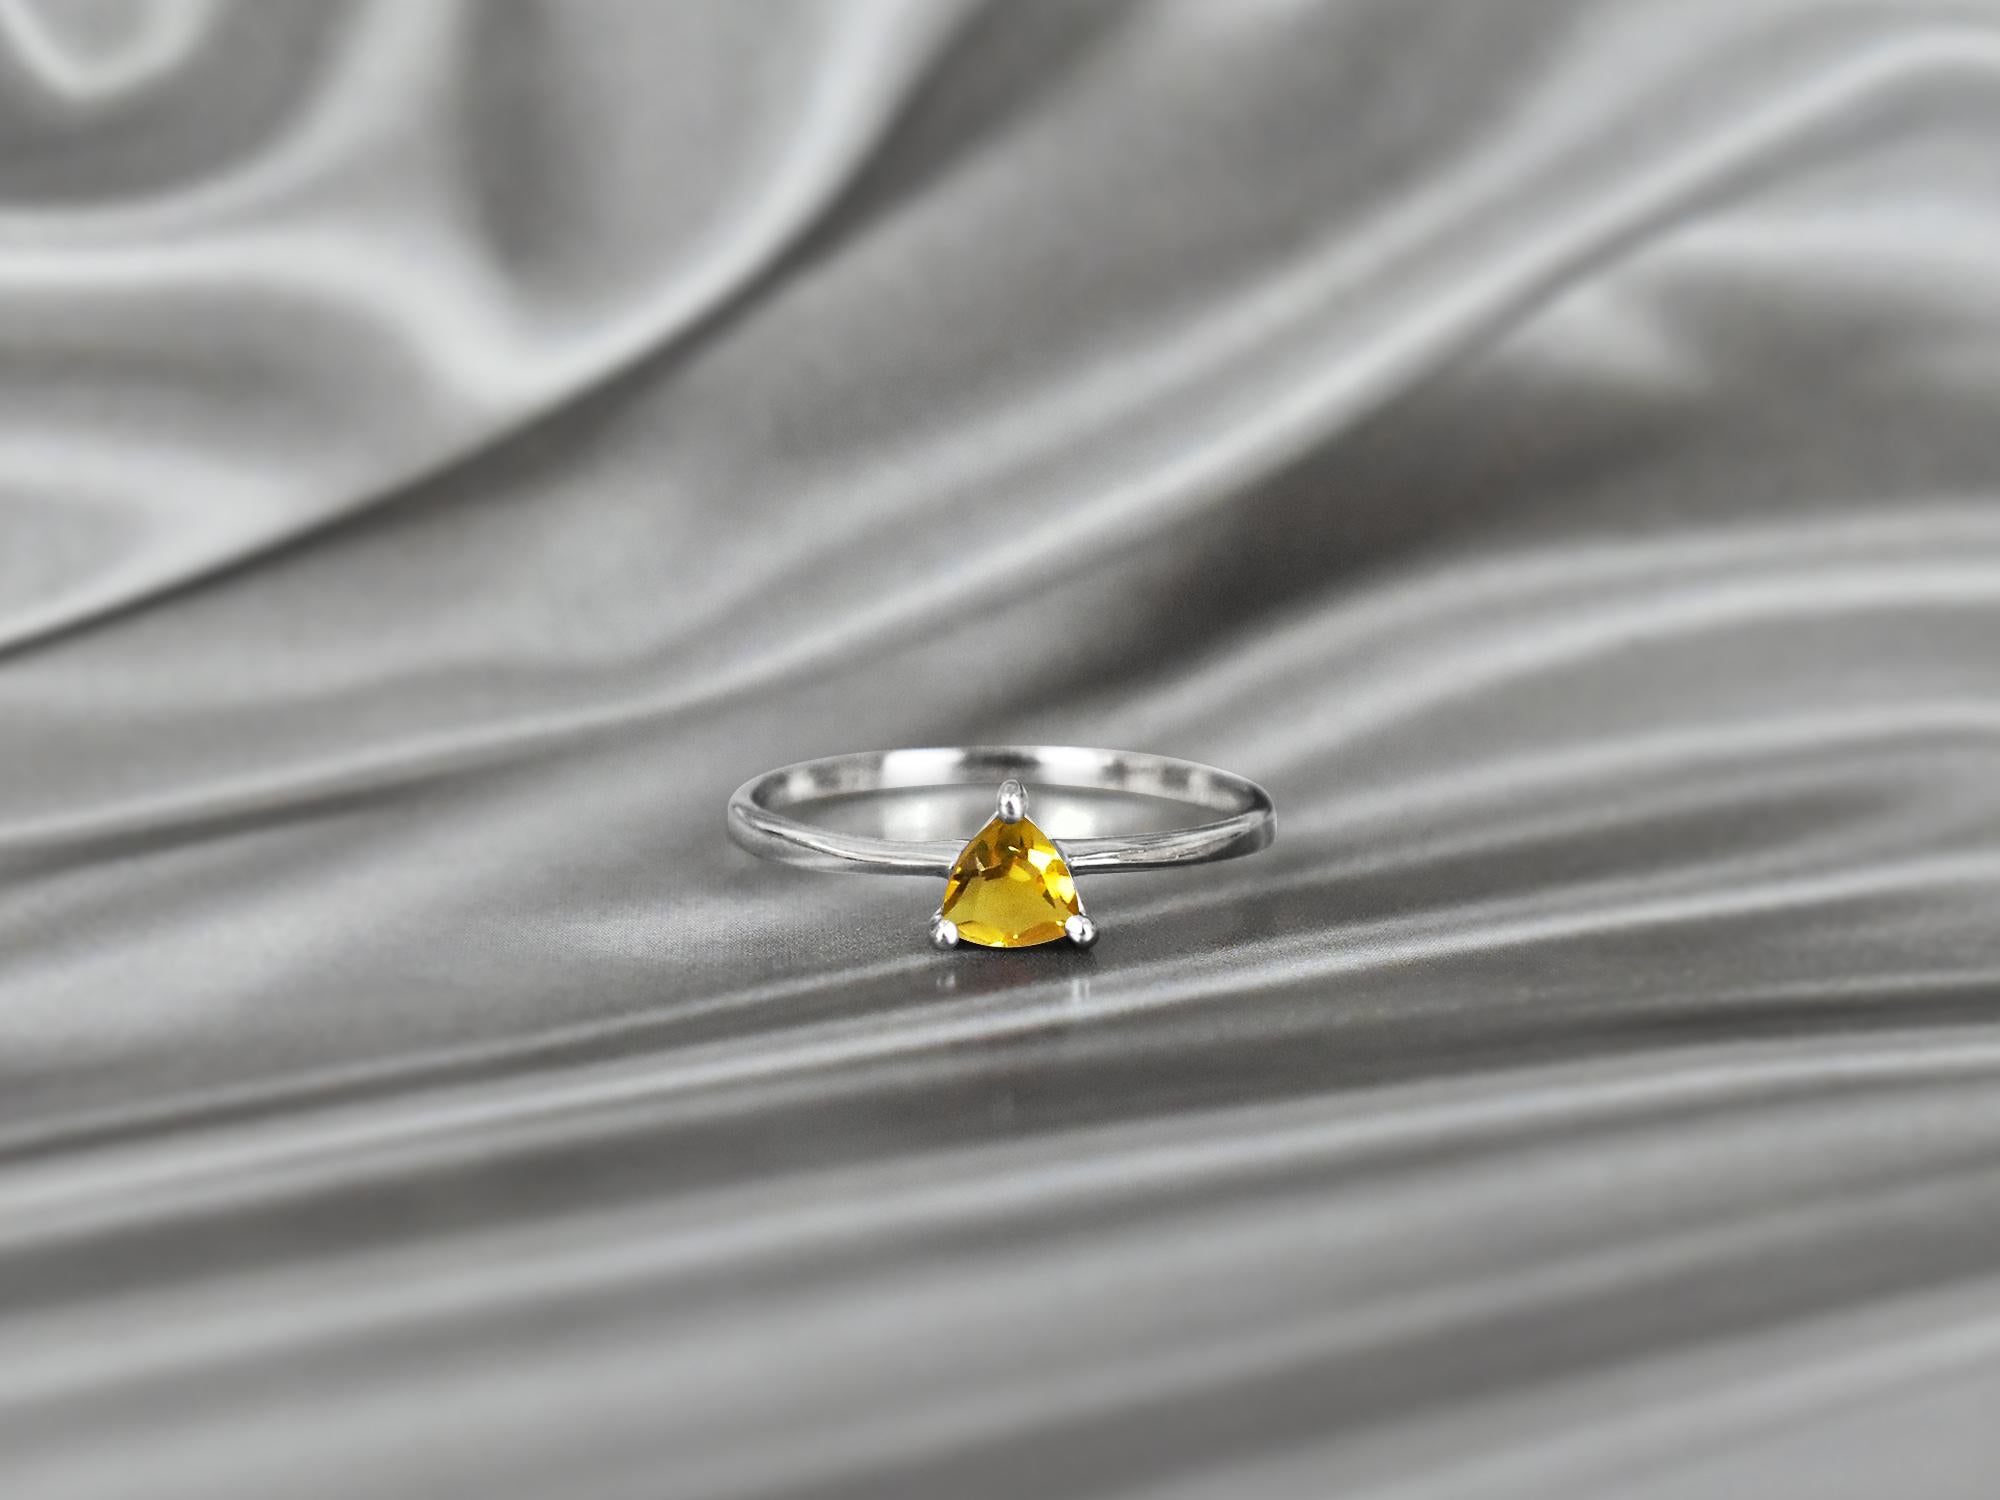 For Sale:  14k Gold Trillion Gemstone 6 mm Trillion Gemstone Engagement Ring Stackable Ring 6